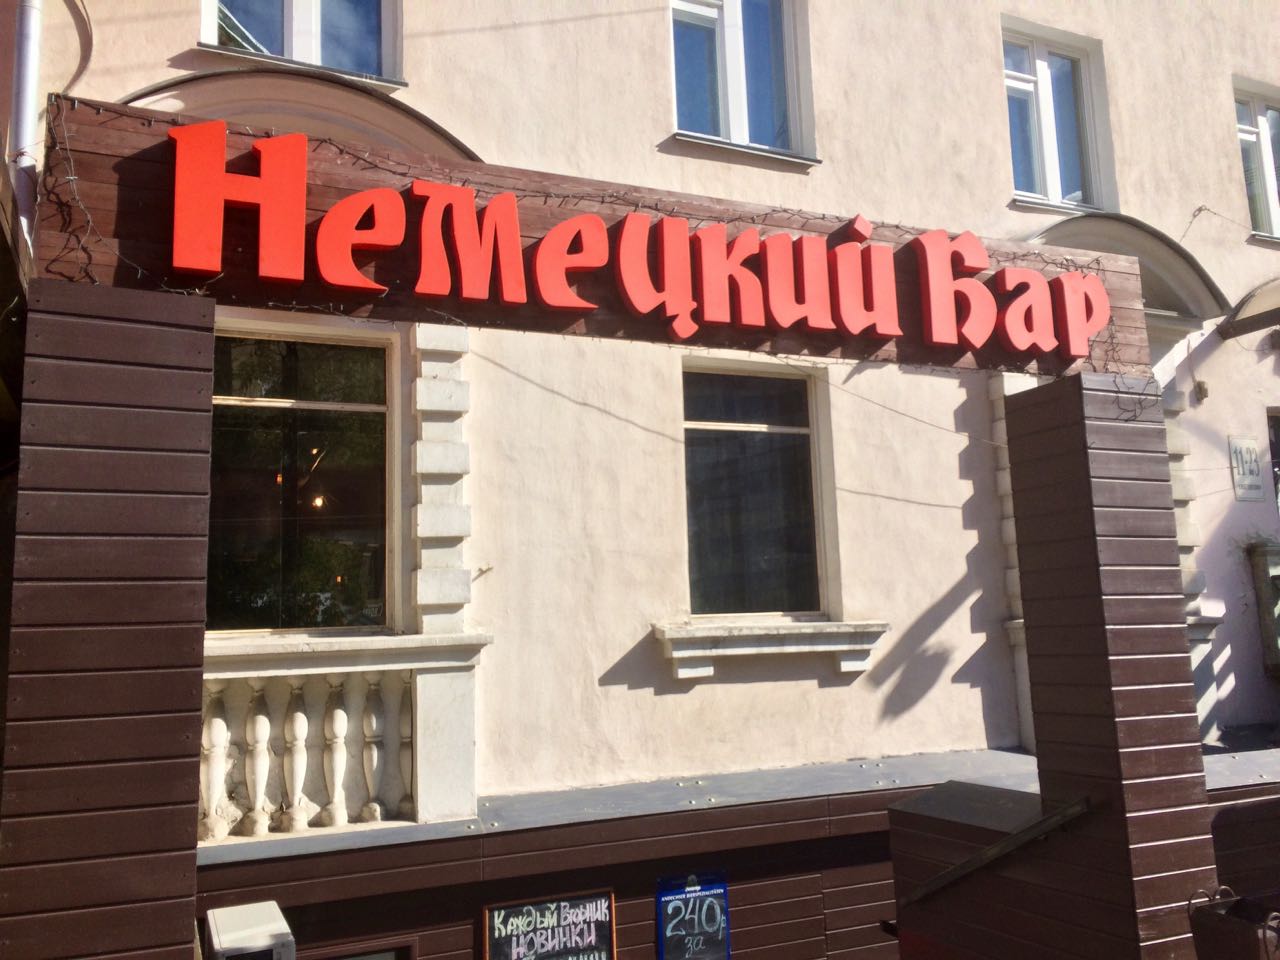 "Nemetzky-Bar" - German Bar